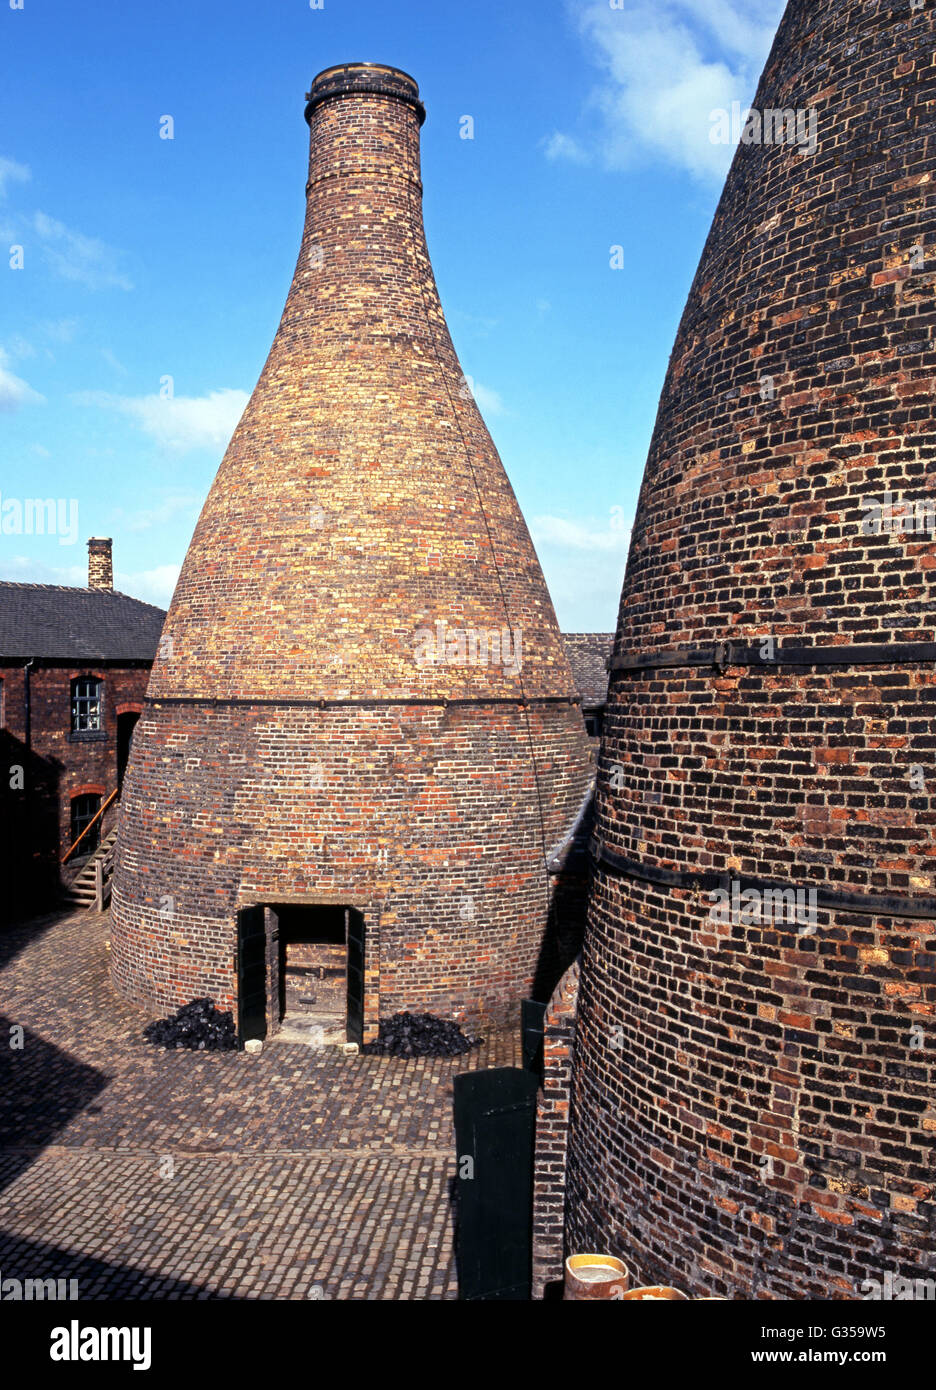 Bottle Kilns at the Gladstone Pottery Museum, Stoke on Trent, Staffordshire, England, UK, Western Europe. Stock Photo